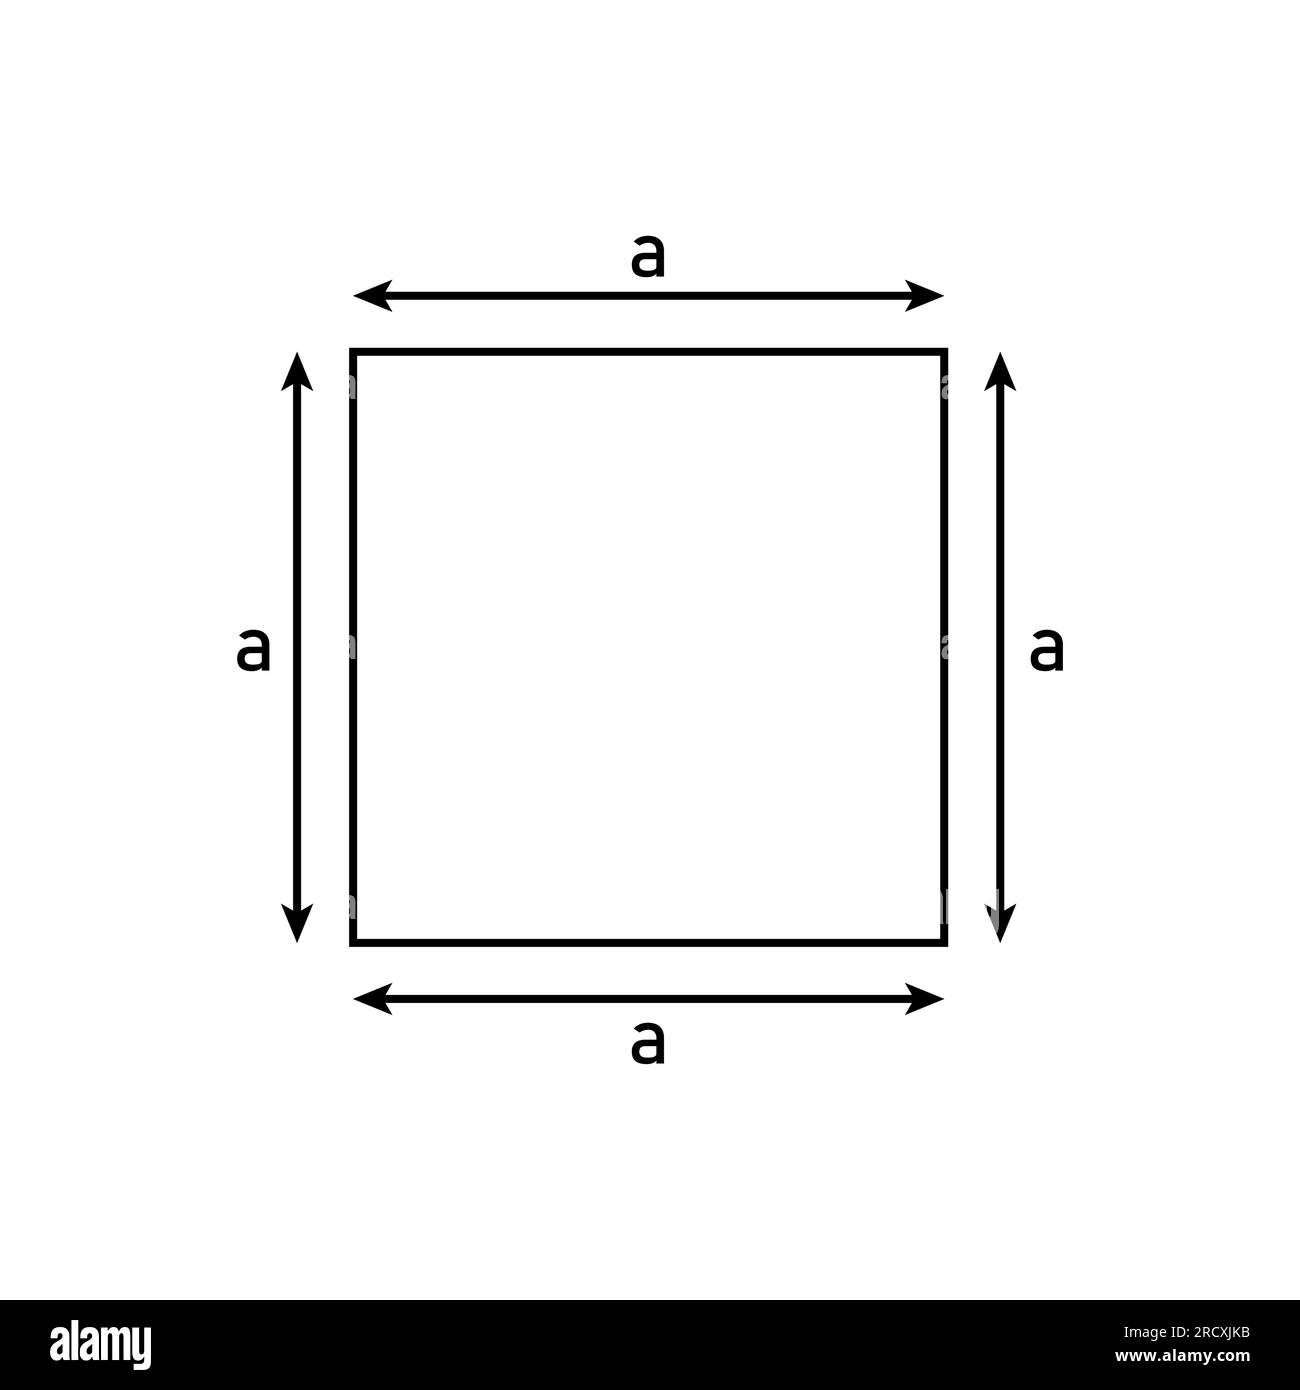 Formula area di forme quadrate. Formule di area per forme quadrate 2D. Illustrazione vettoriale isolata su sfondo bianco. Illustrazione Vettoriale